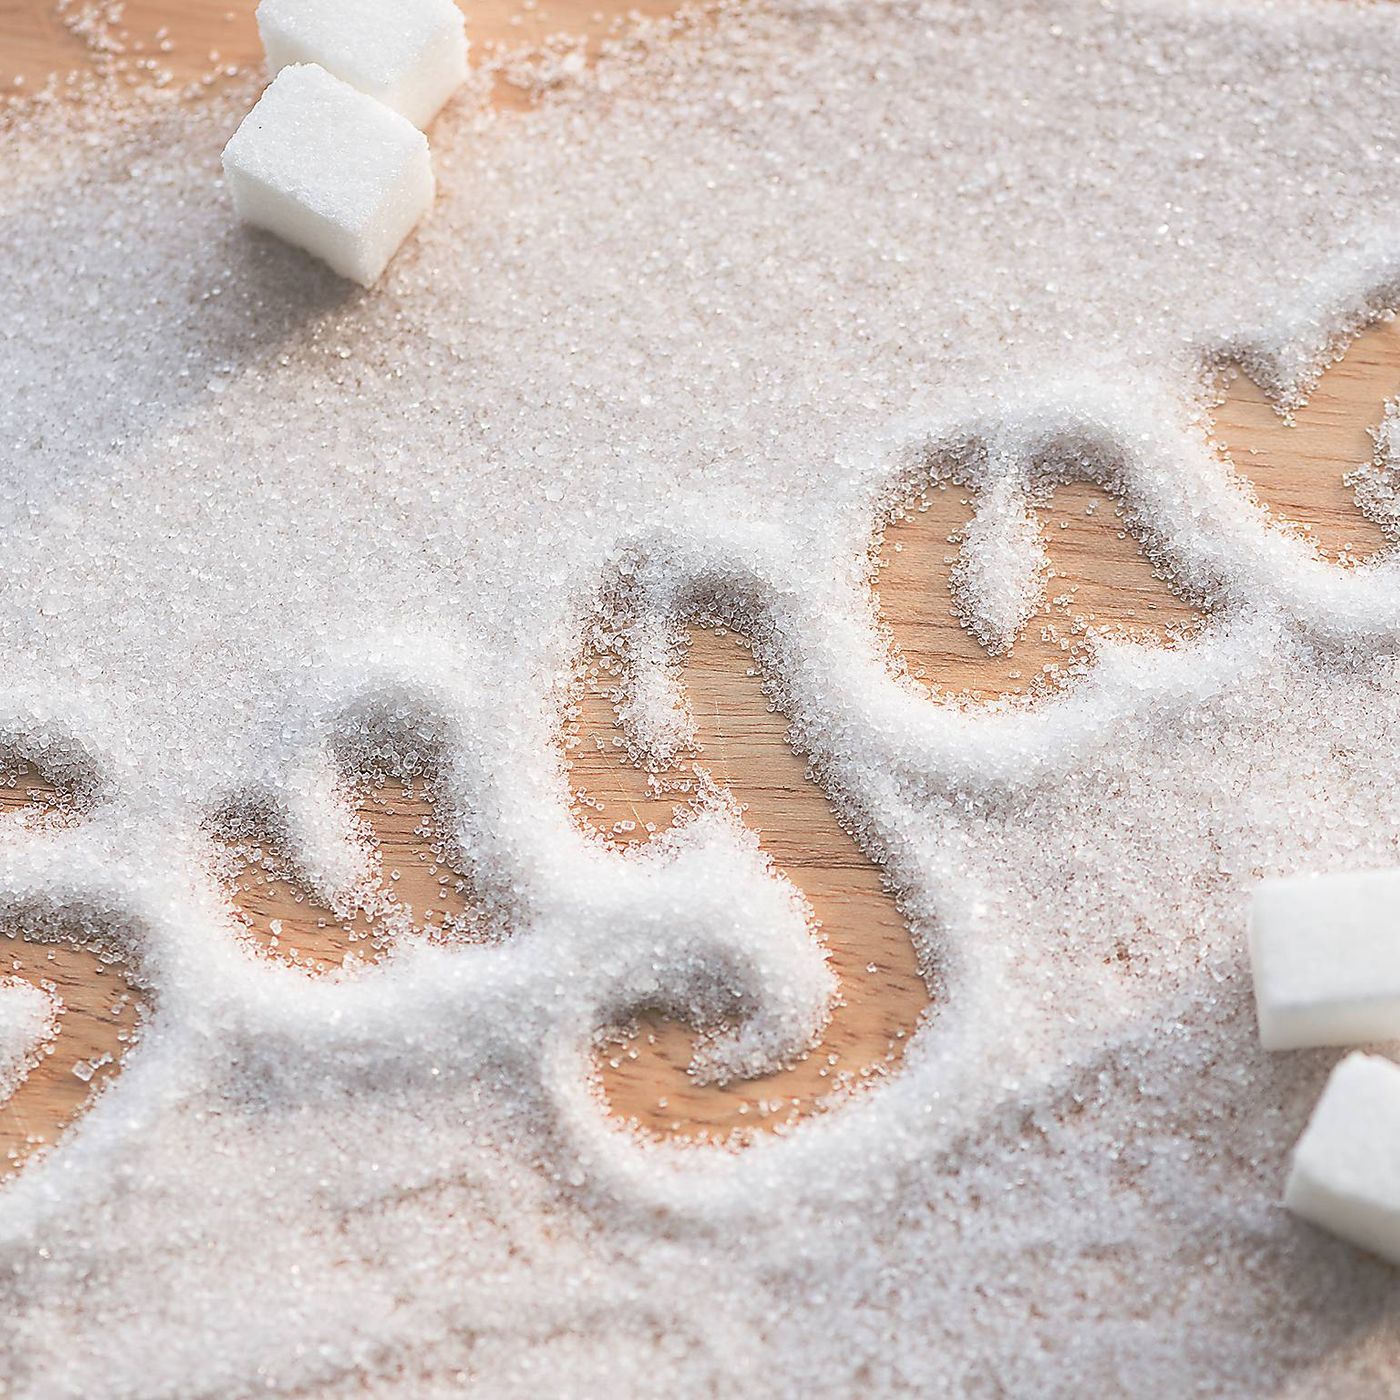 Sugar, please!